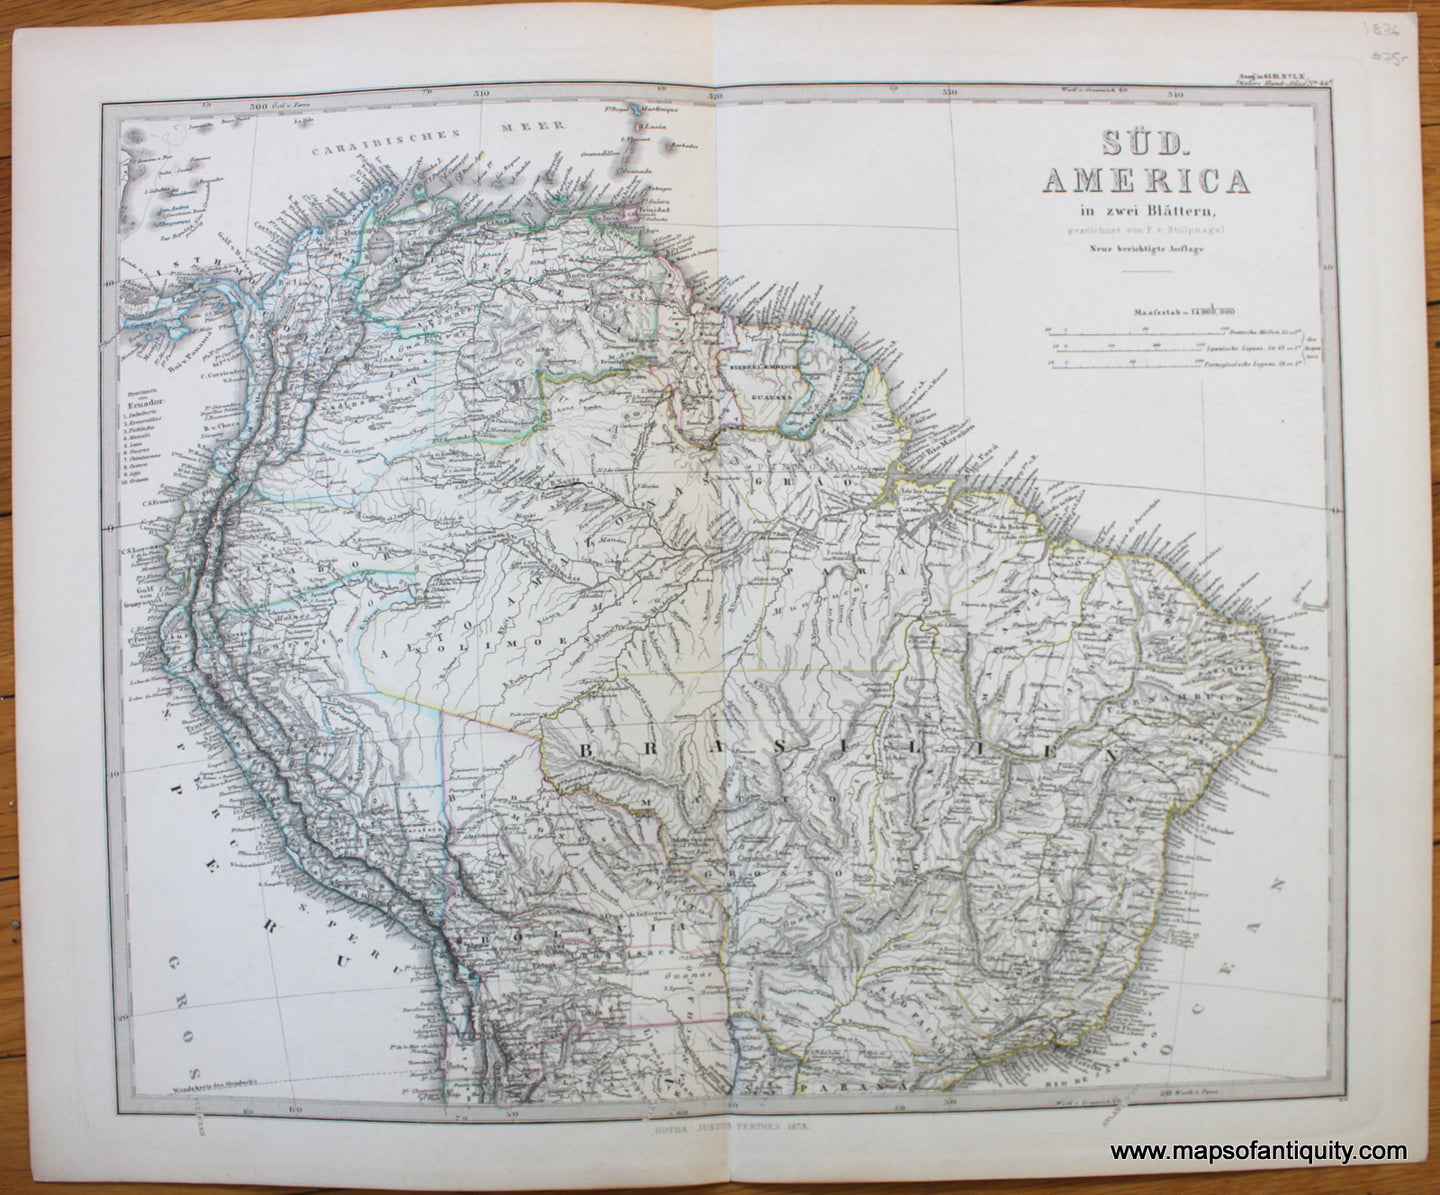 Antique-Map-Sud-America-South-zwei-Blattern-Stieler-1876-1870s-1800s-19th-century-Maps-of-Antiquity